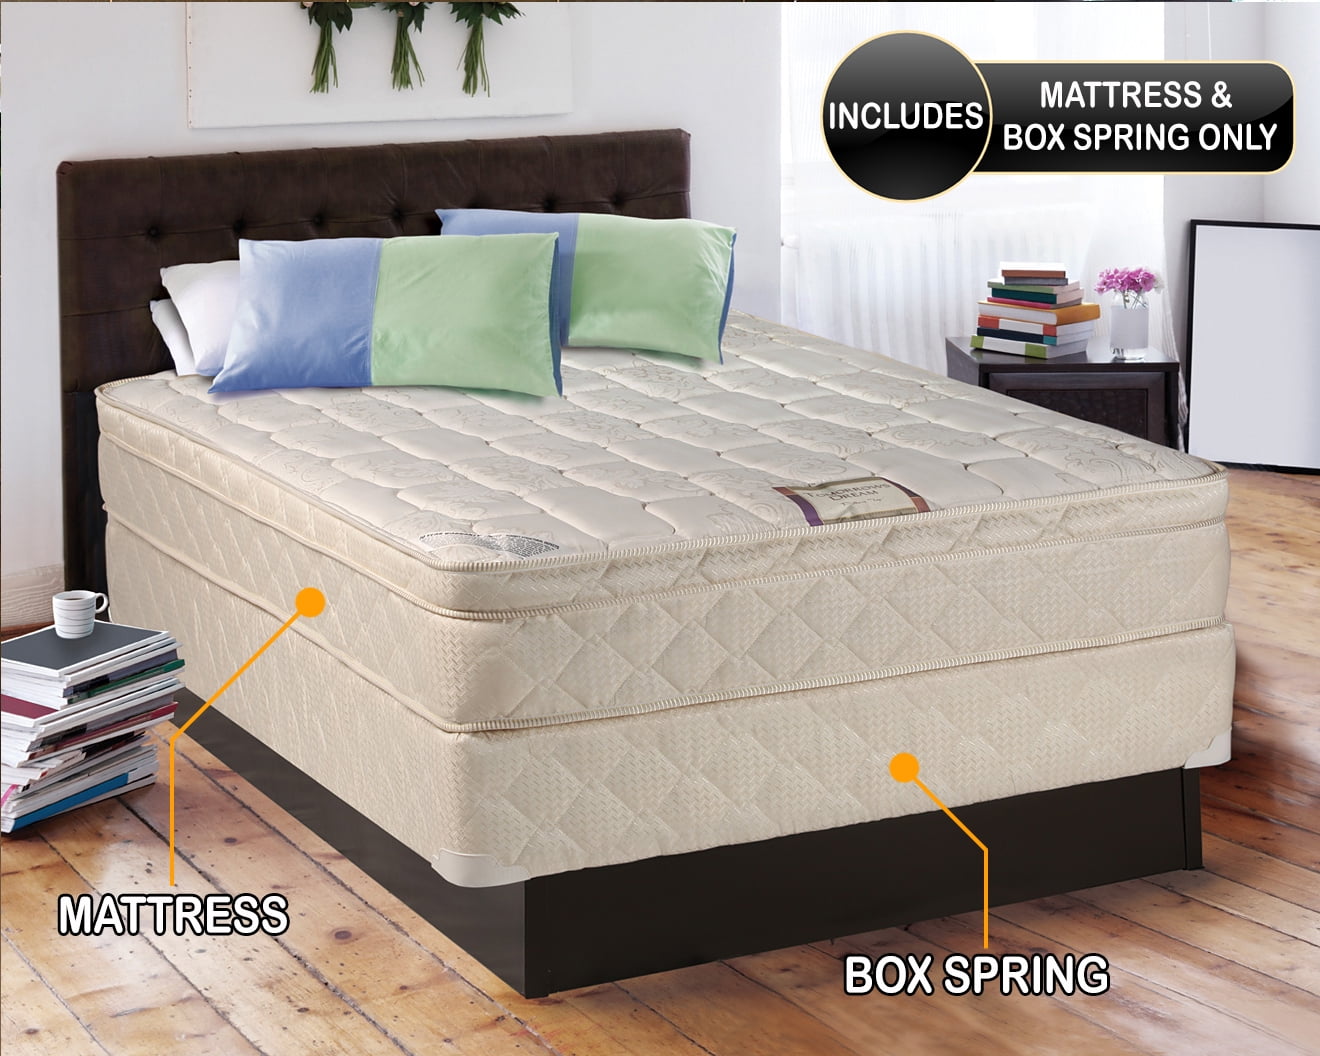 queen mattress & box spring set on sale